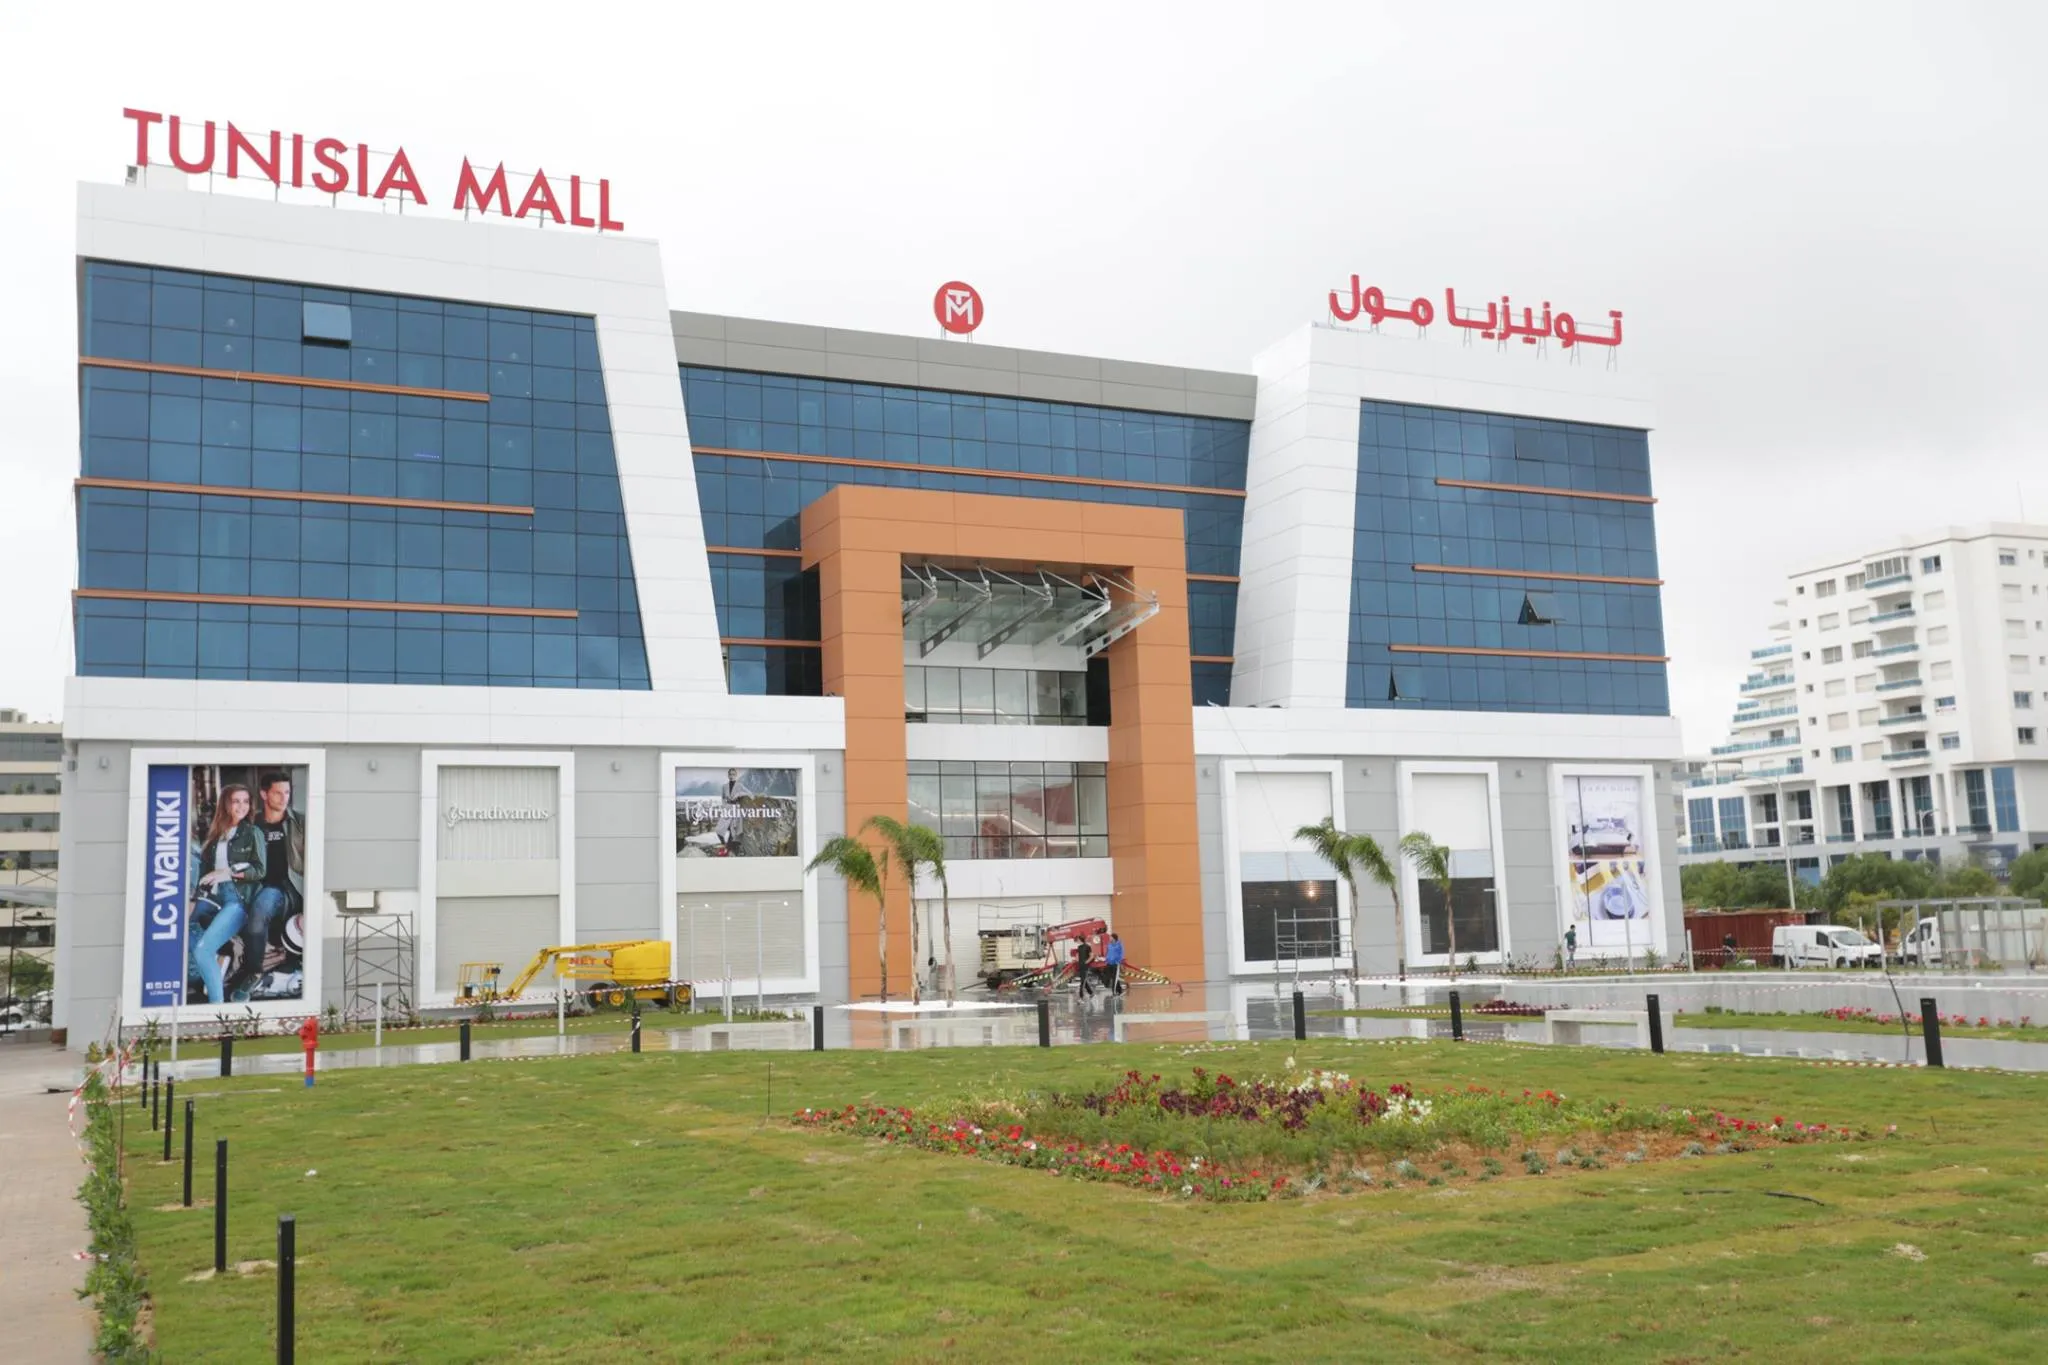 Tunisia Mall 2 in Tunisia, africa | Handbags,Shoes,Accessories,Clothes,Cosmetics,Sportswear,Swimwear - Country Helper